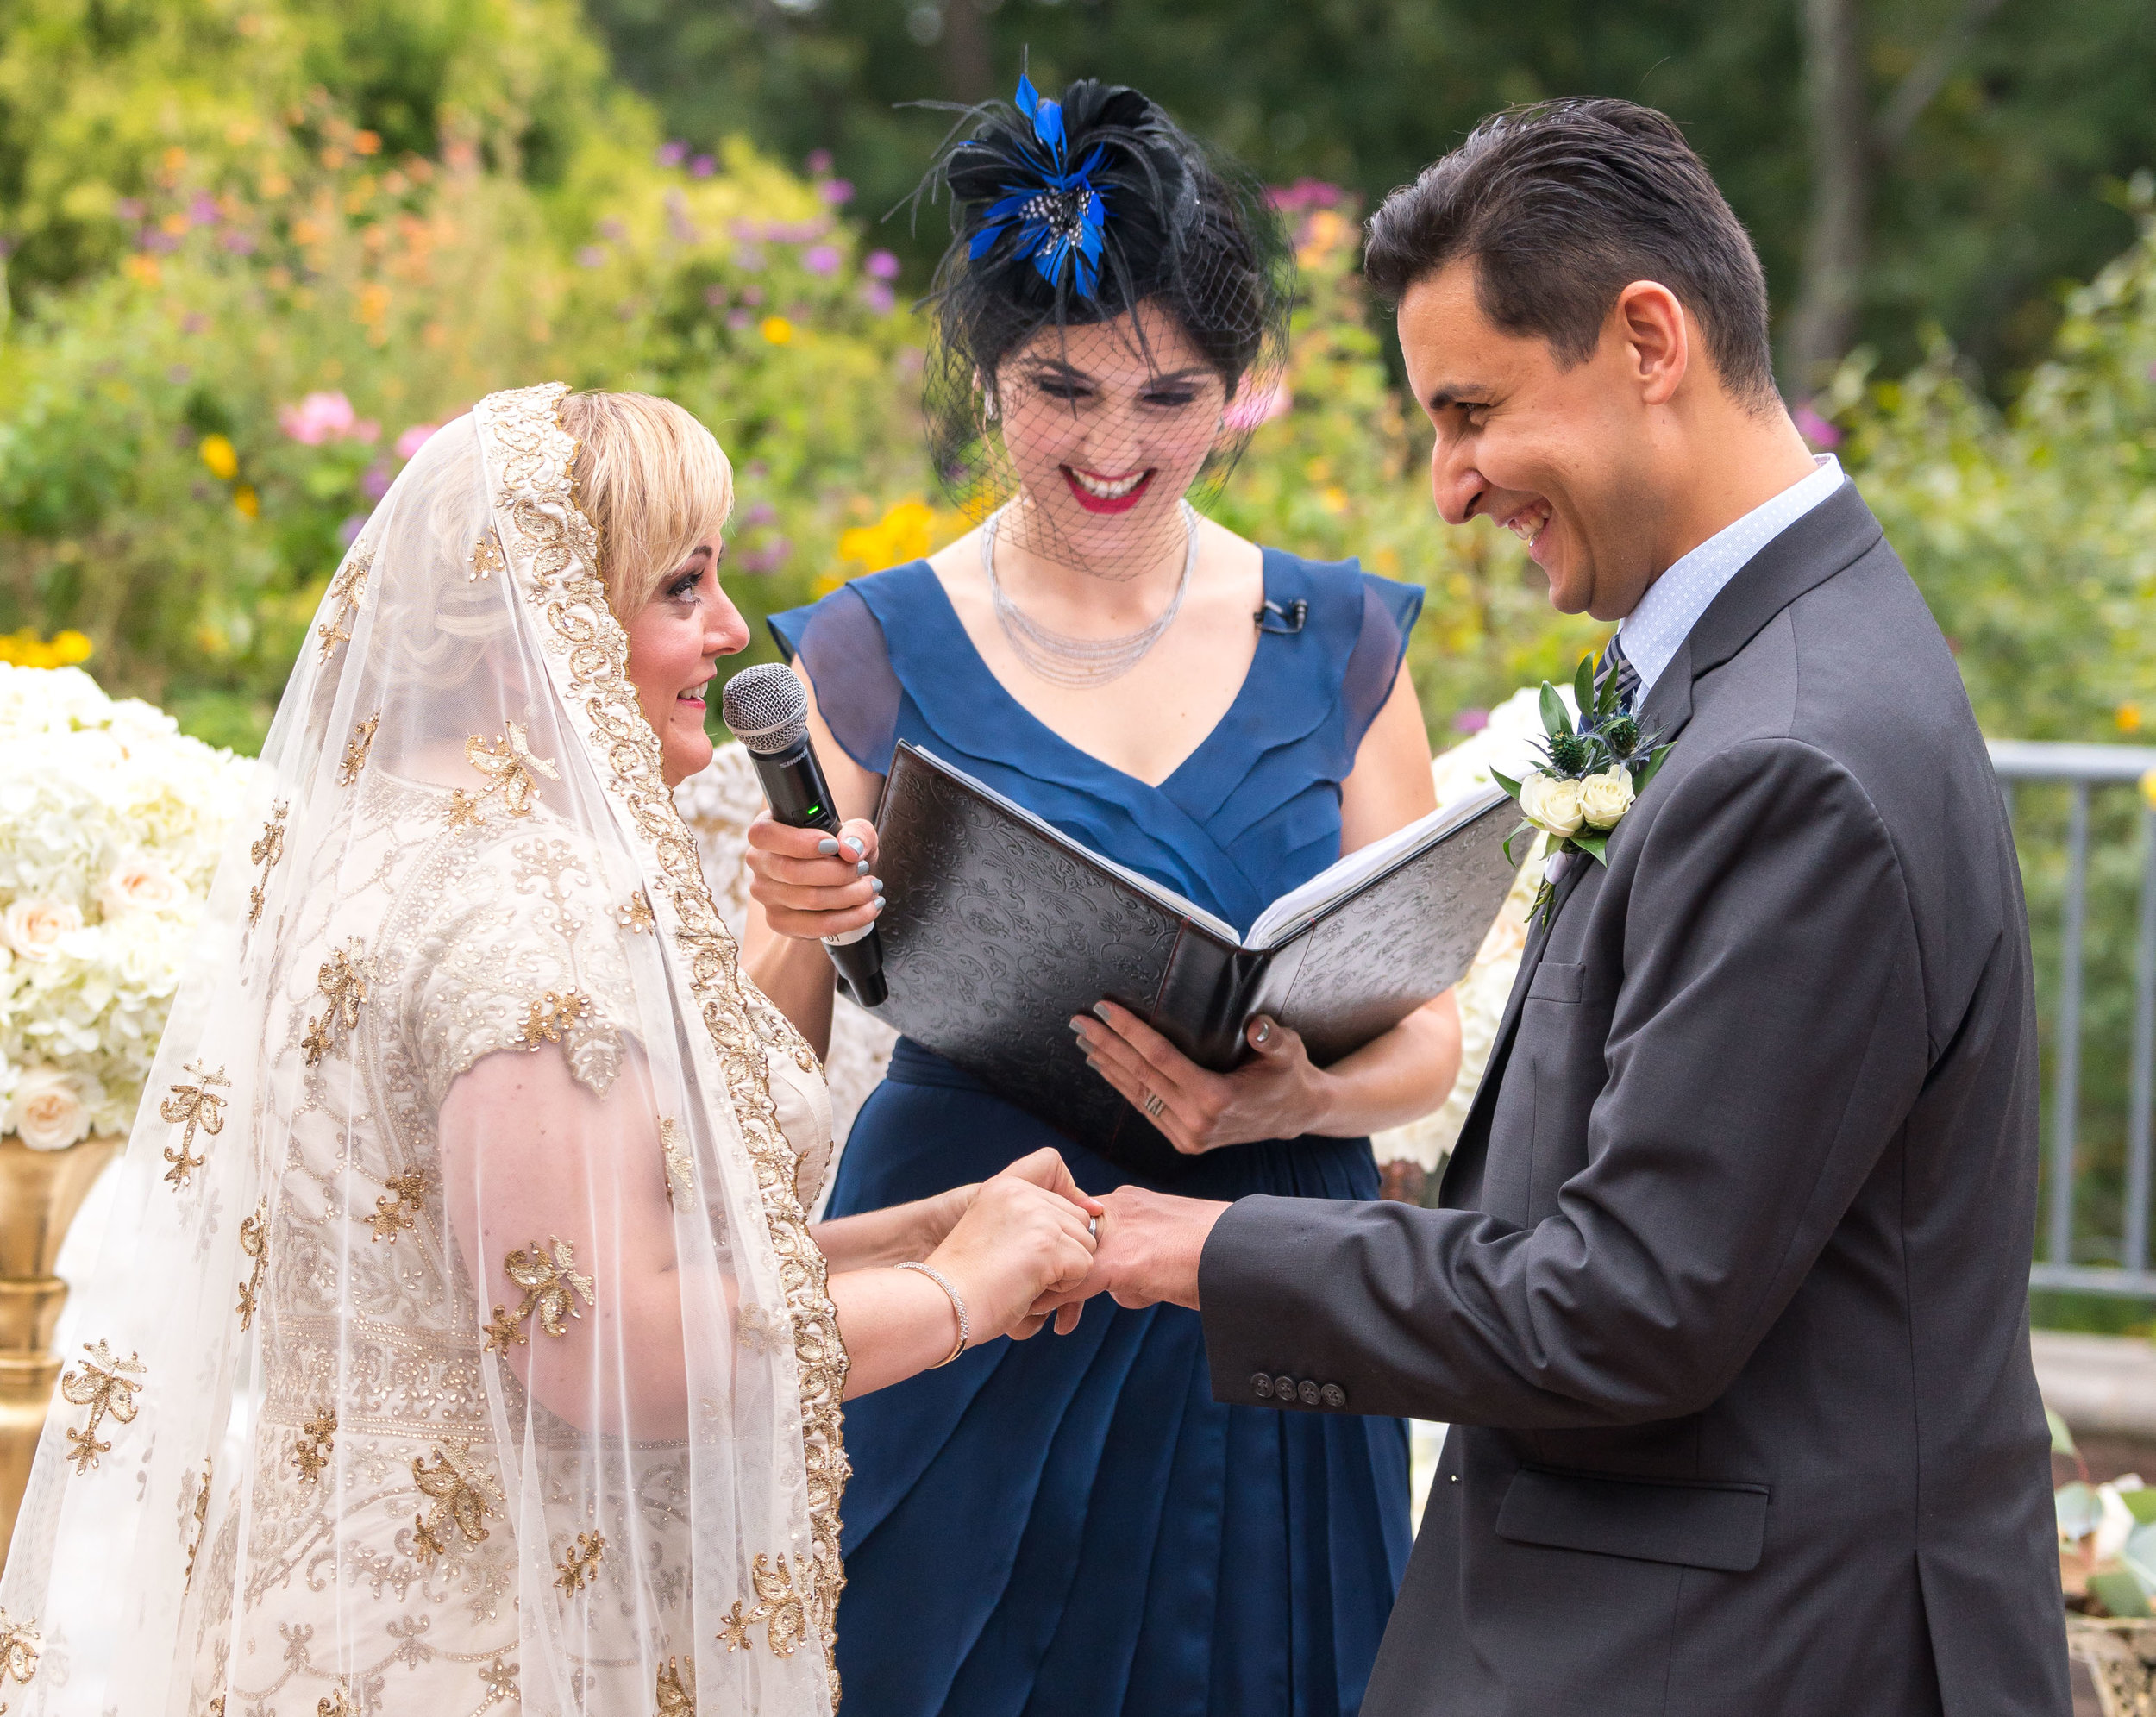 Wedding ceremony at Meadowlark Botanical Gardens